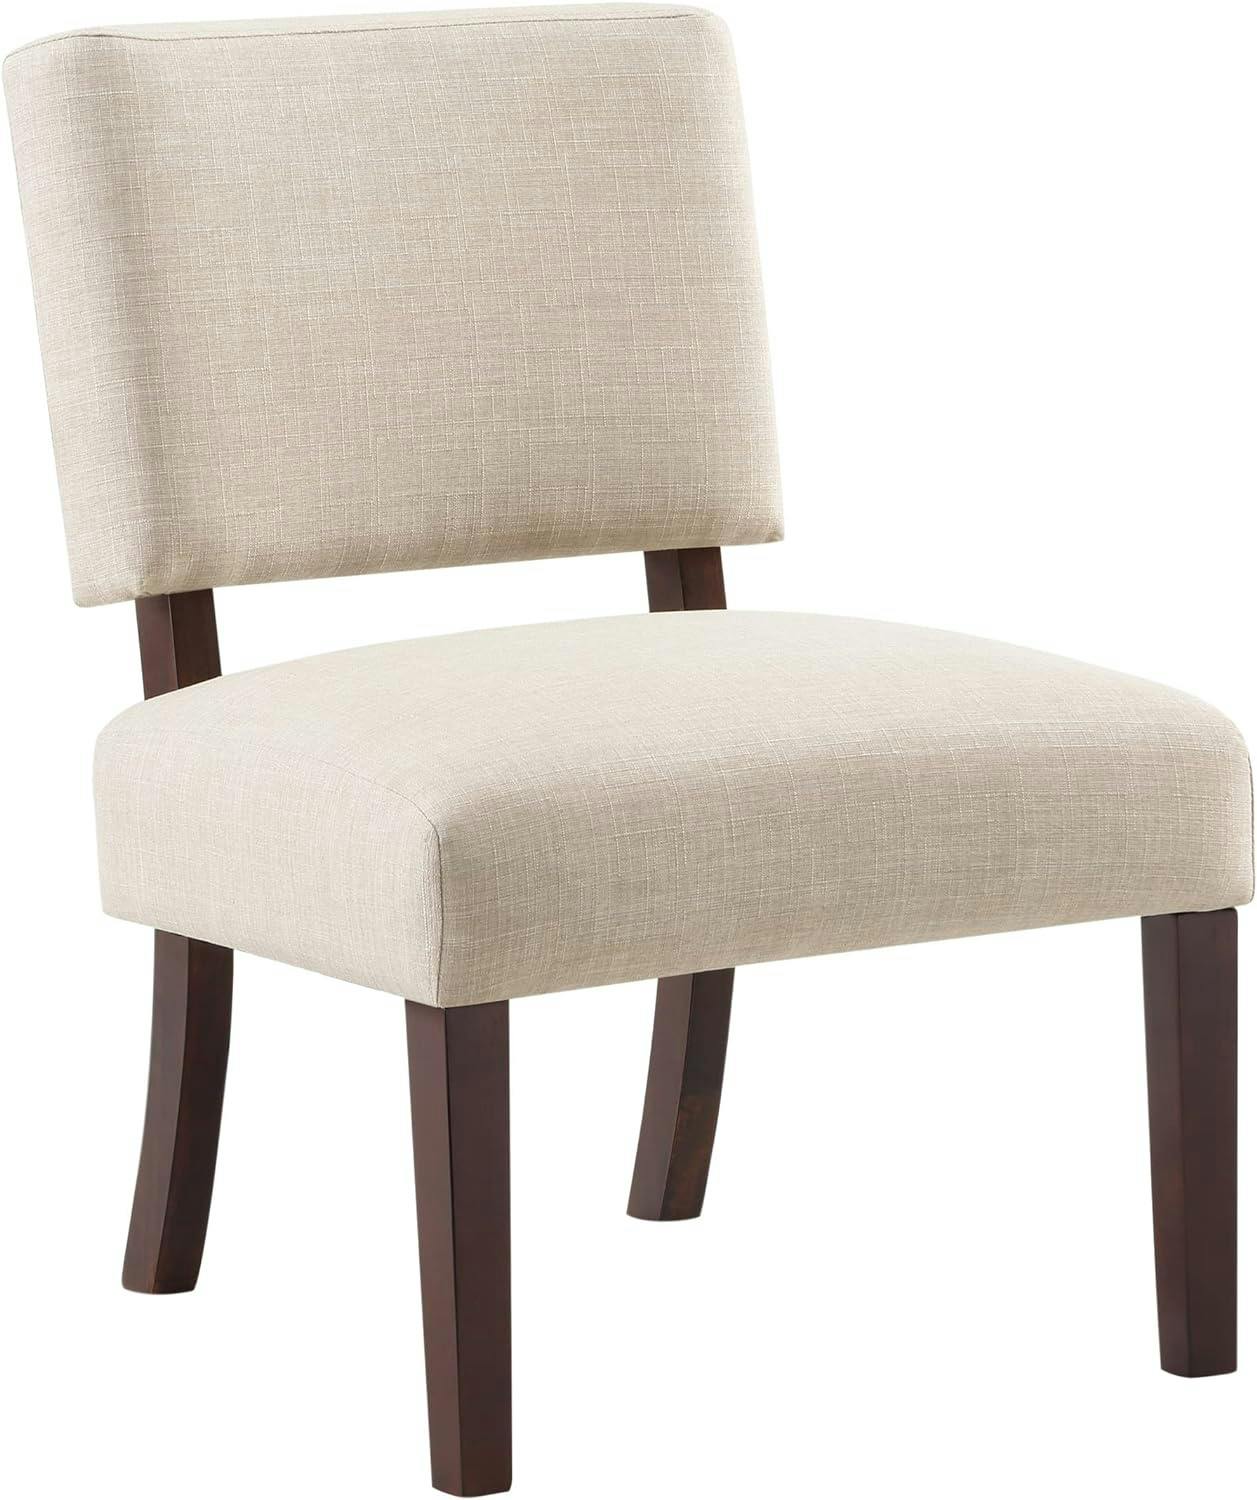 Jasmine Cream Fabric Side Chair with Espresso Wood Legs